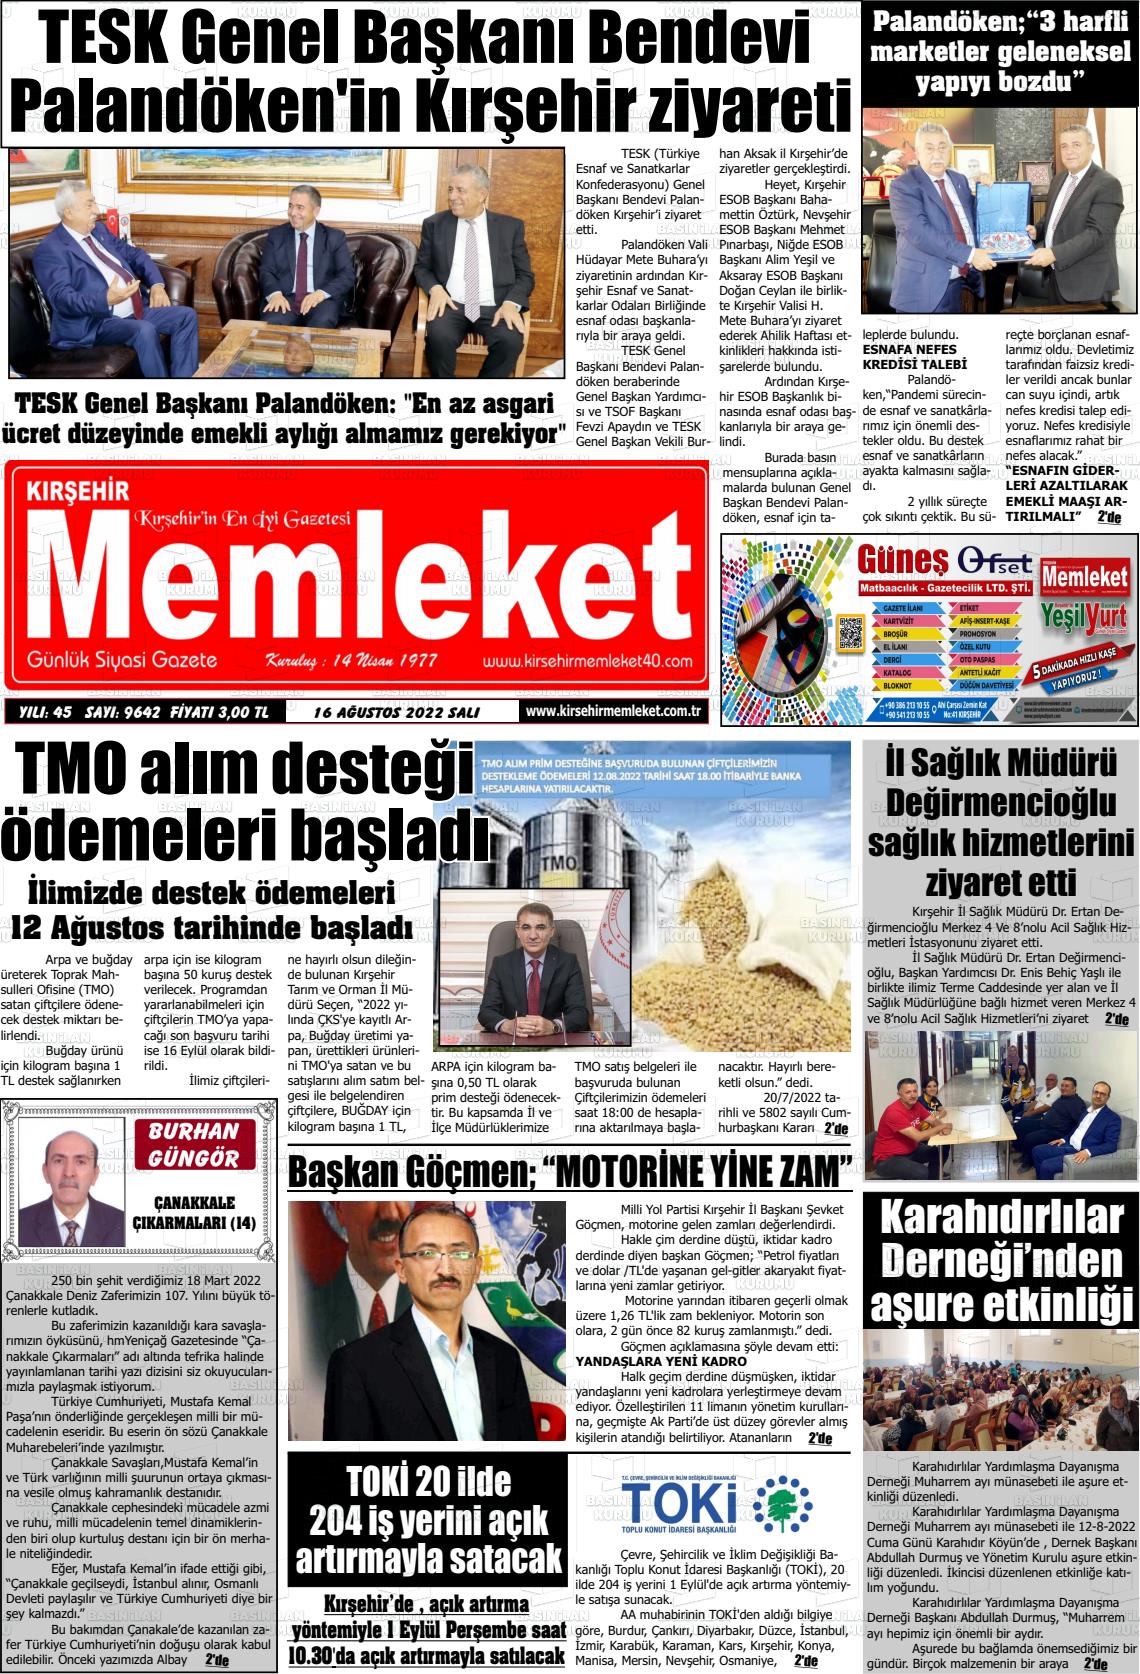 16 Ağustos 2022 Kırşehir Memleket Gazete Manşeti